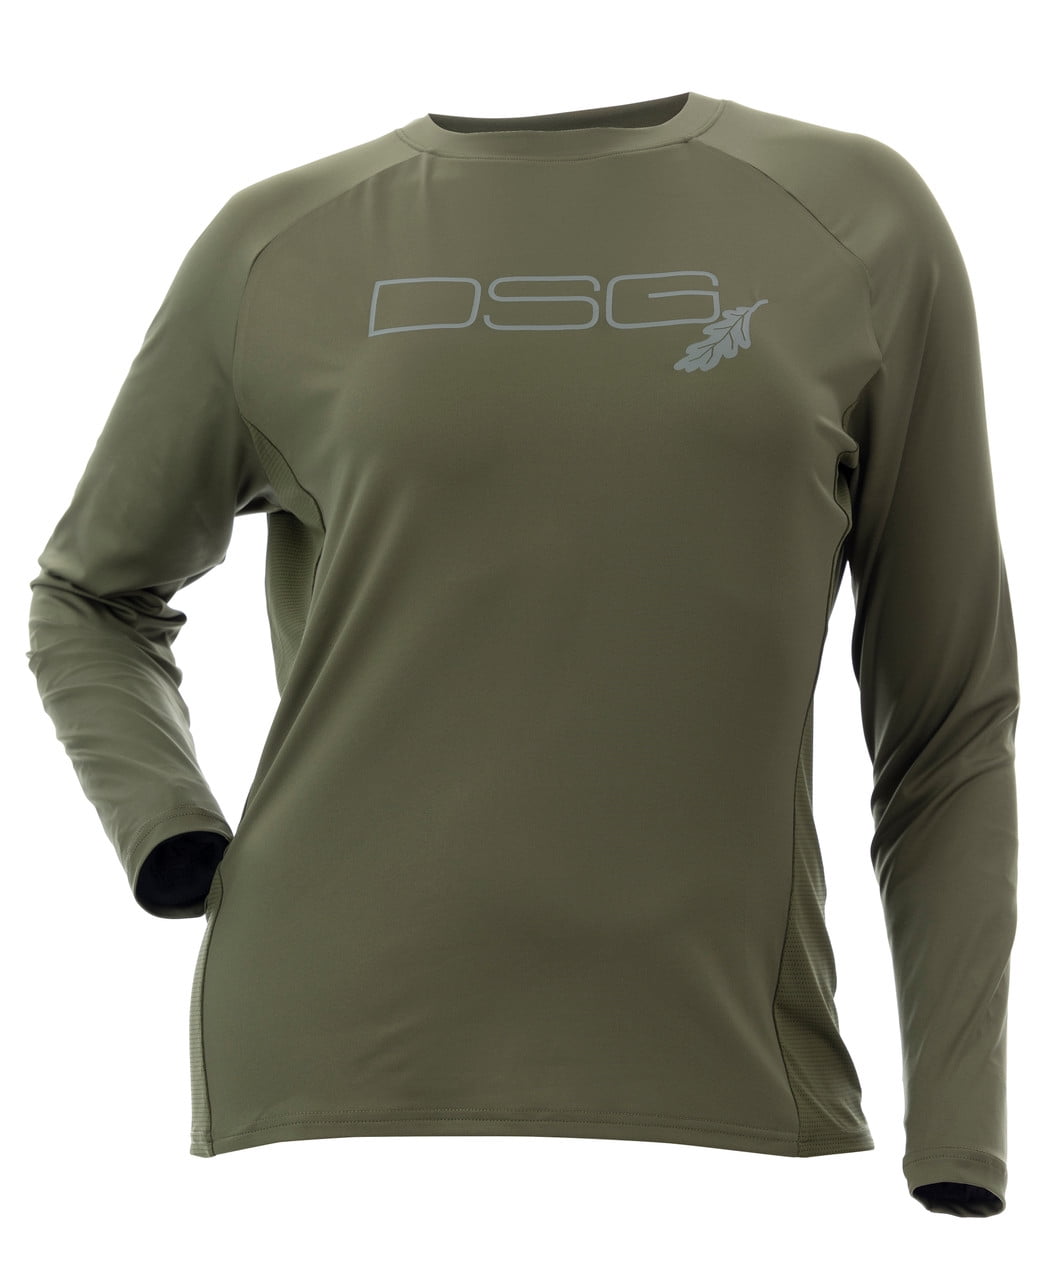 DSG Outerwear Ultra Lightweight Hunting Shirt - UPF 50+, Stone, MD 